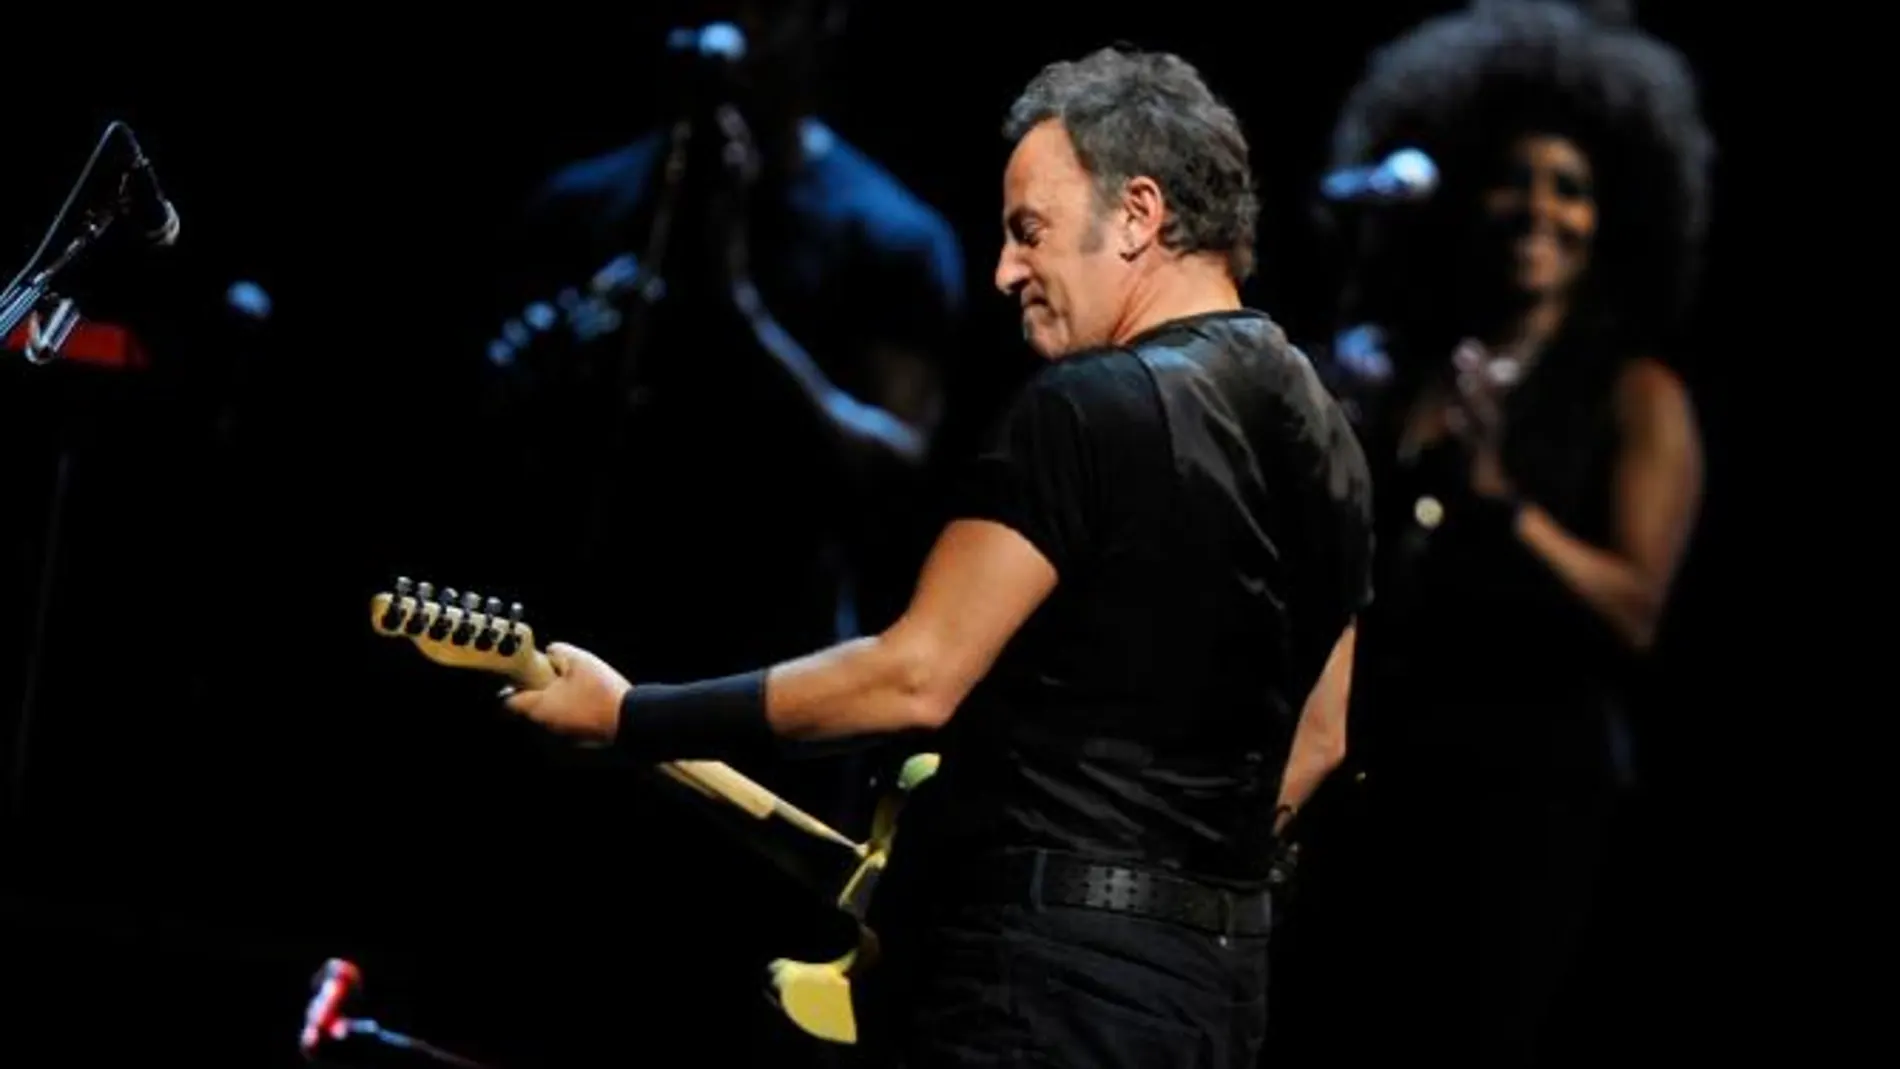 Bruce Springsteen vendió su catálogo musical a Sony Music por 500 millones de dólares.